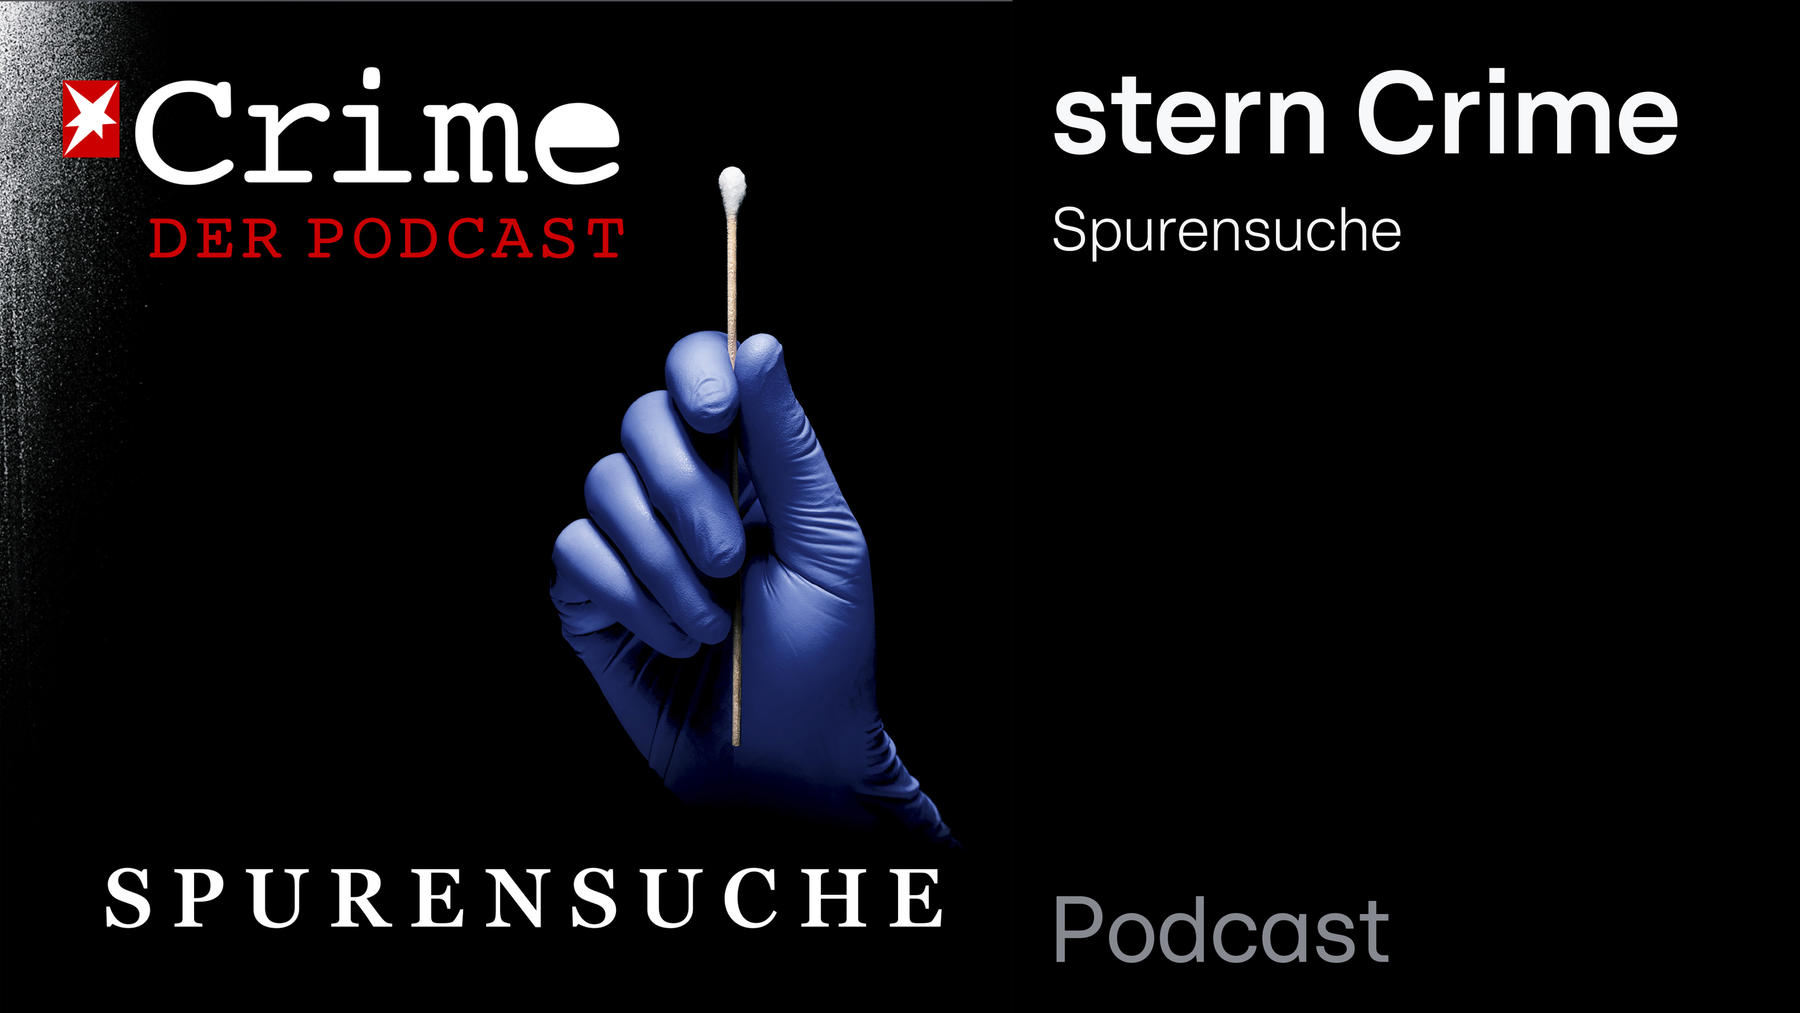 Podcast: Stern Crime